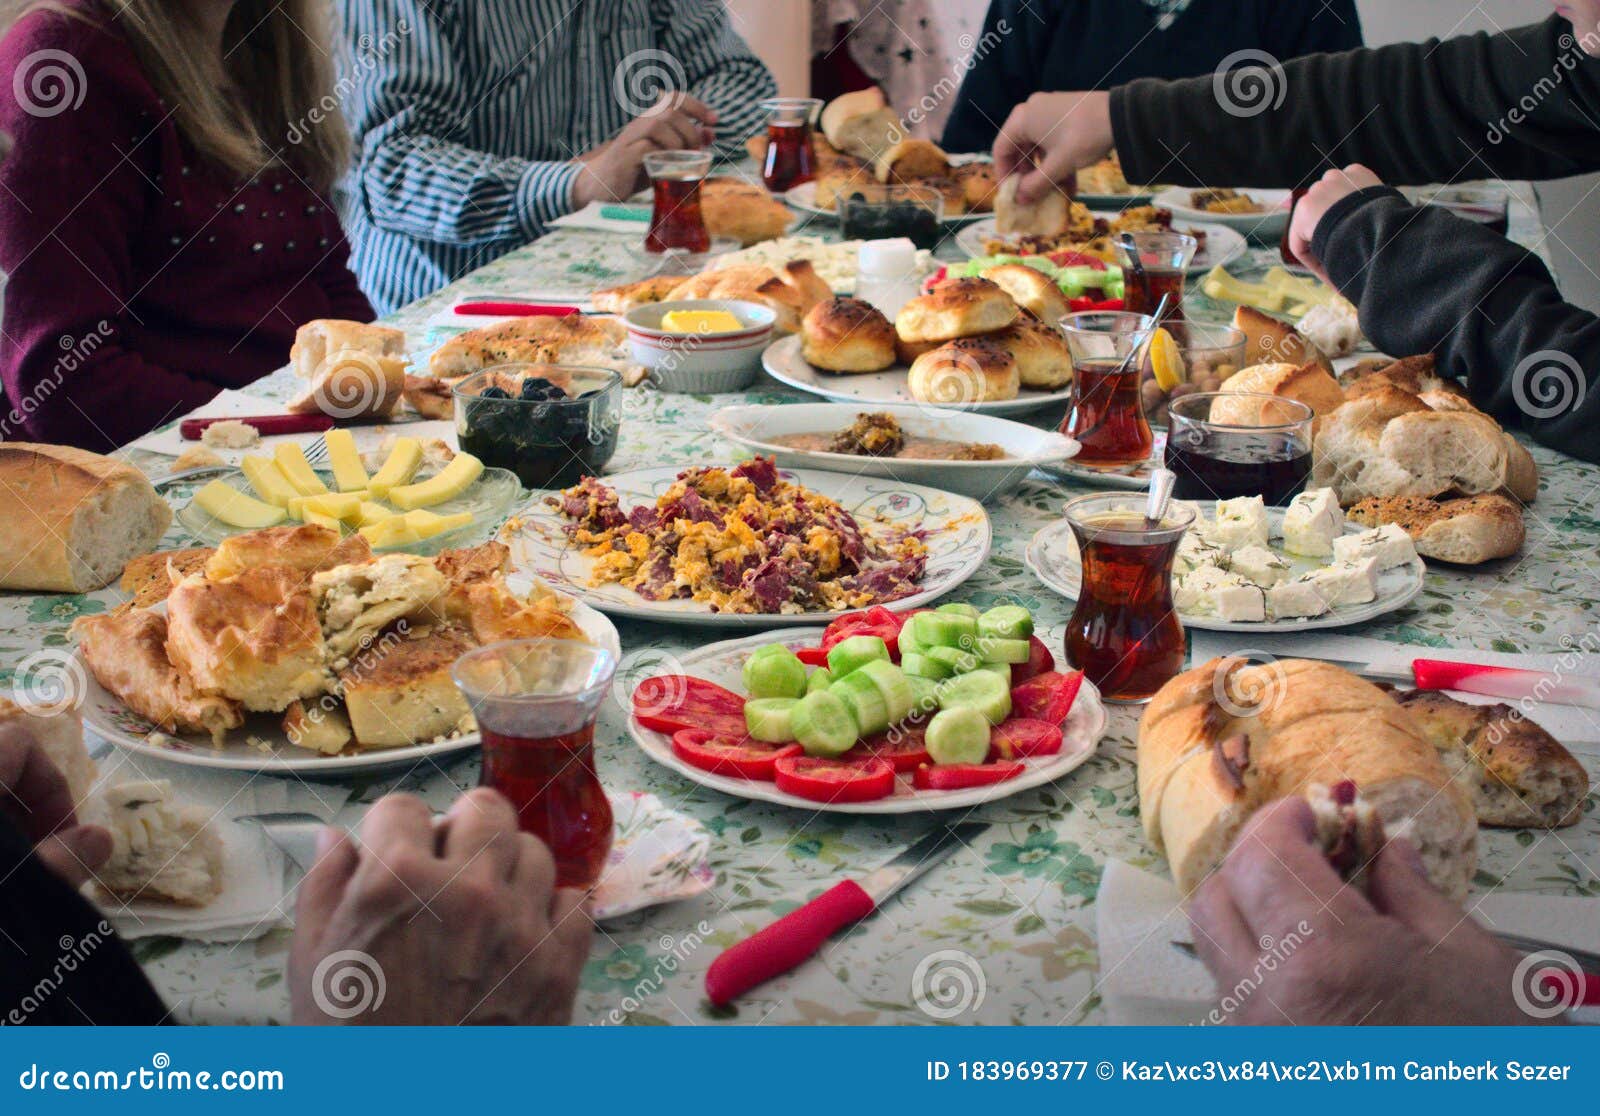 Muslim Family Having Breakfast Together Celebrating Eidulfitr after